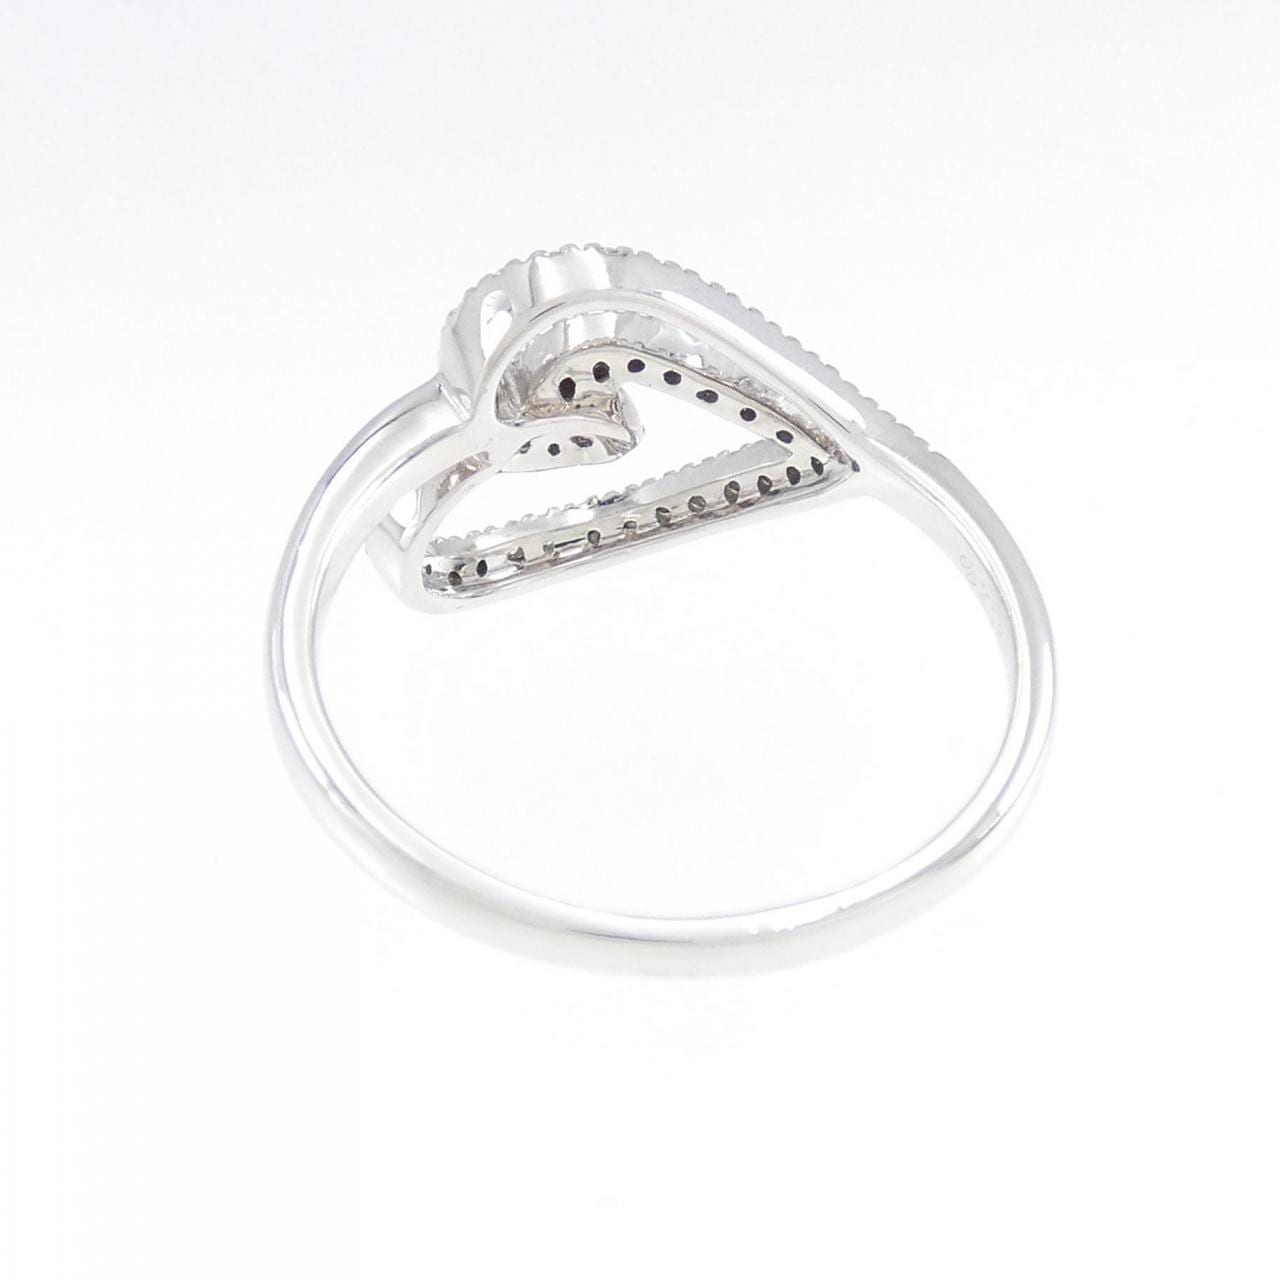 K18WG heart Diamond ring 0.25CT